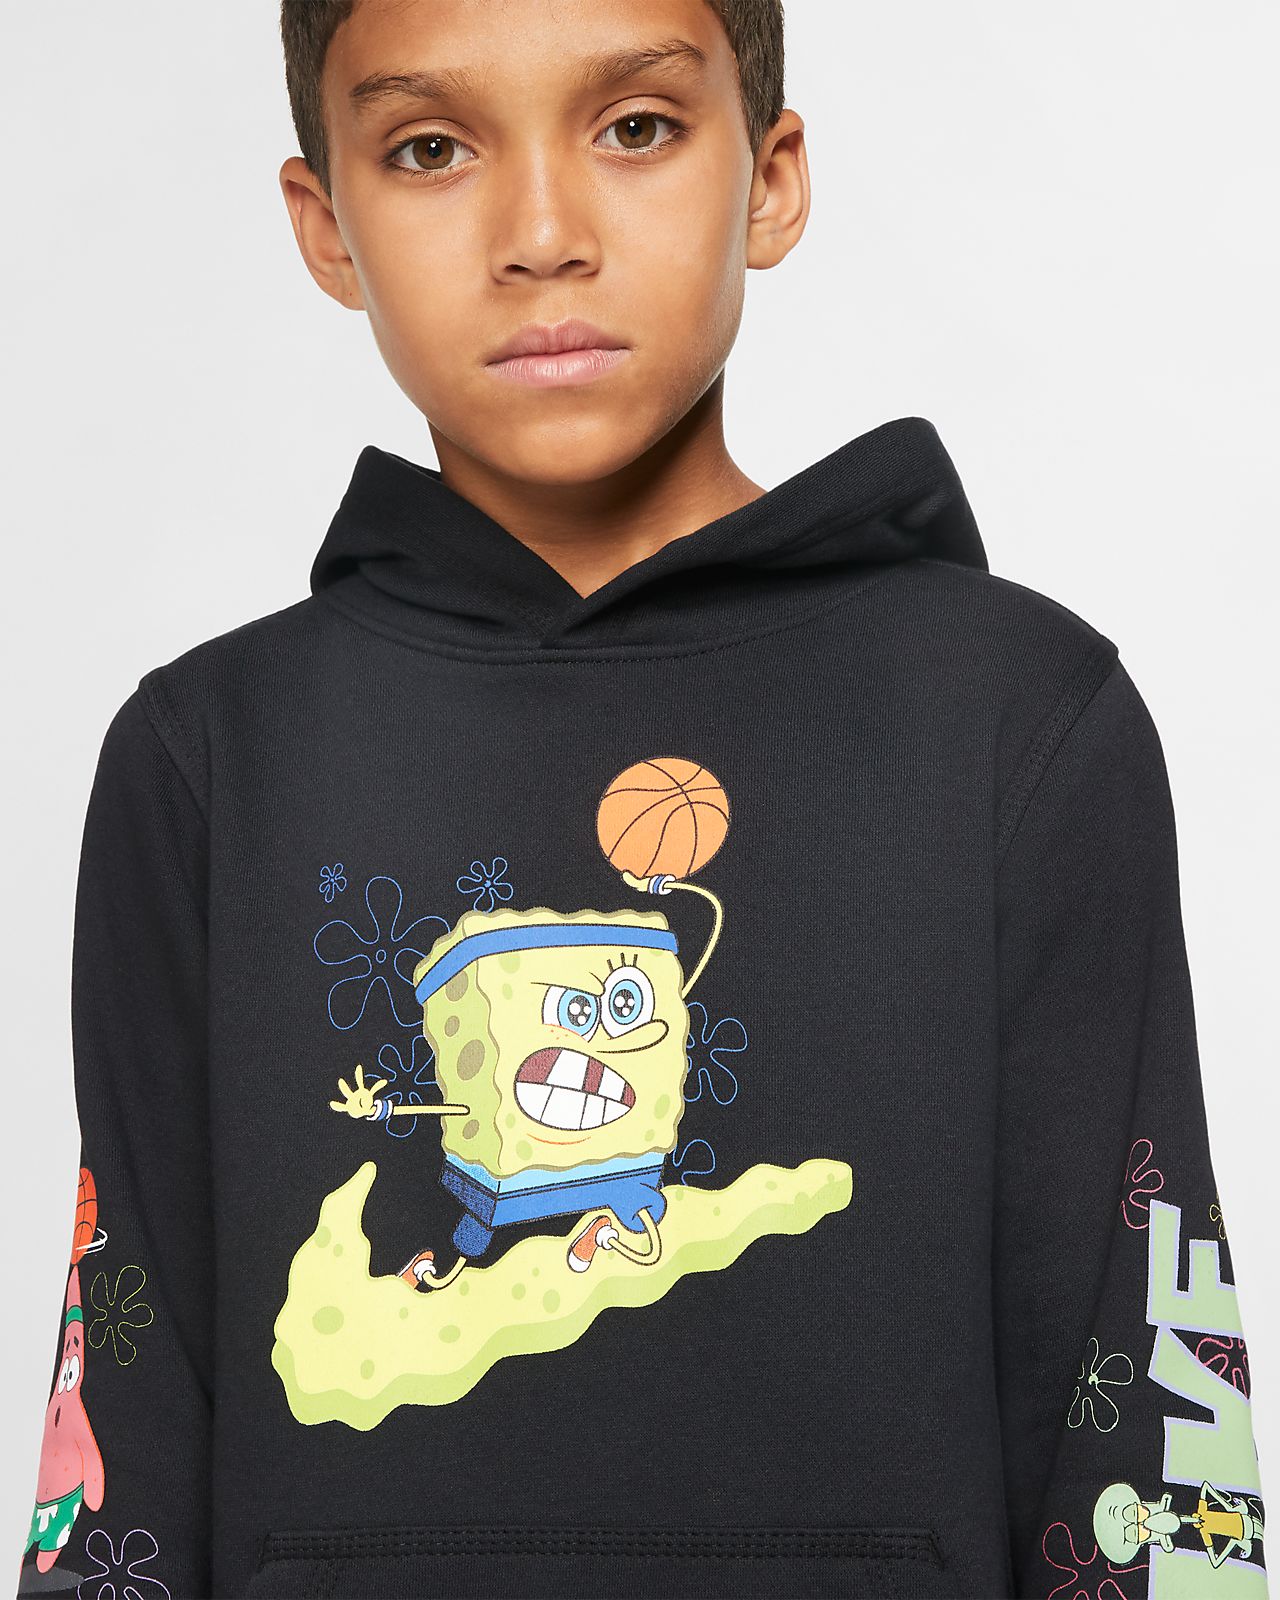 kyrie spongebob shirt youth